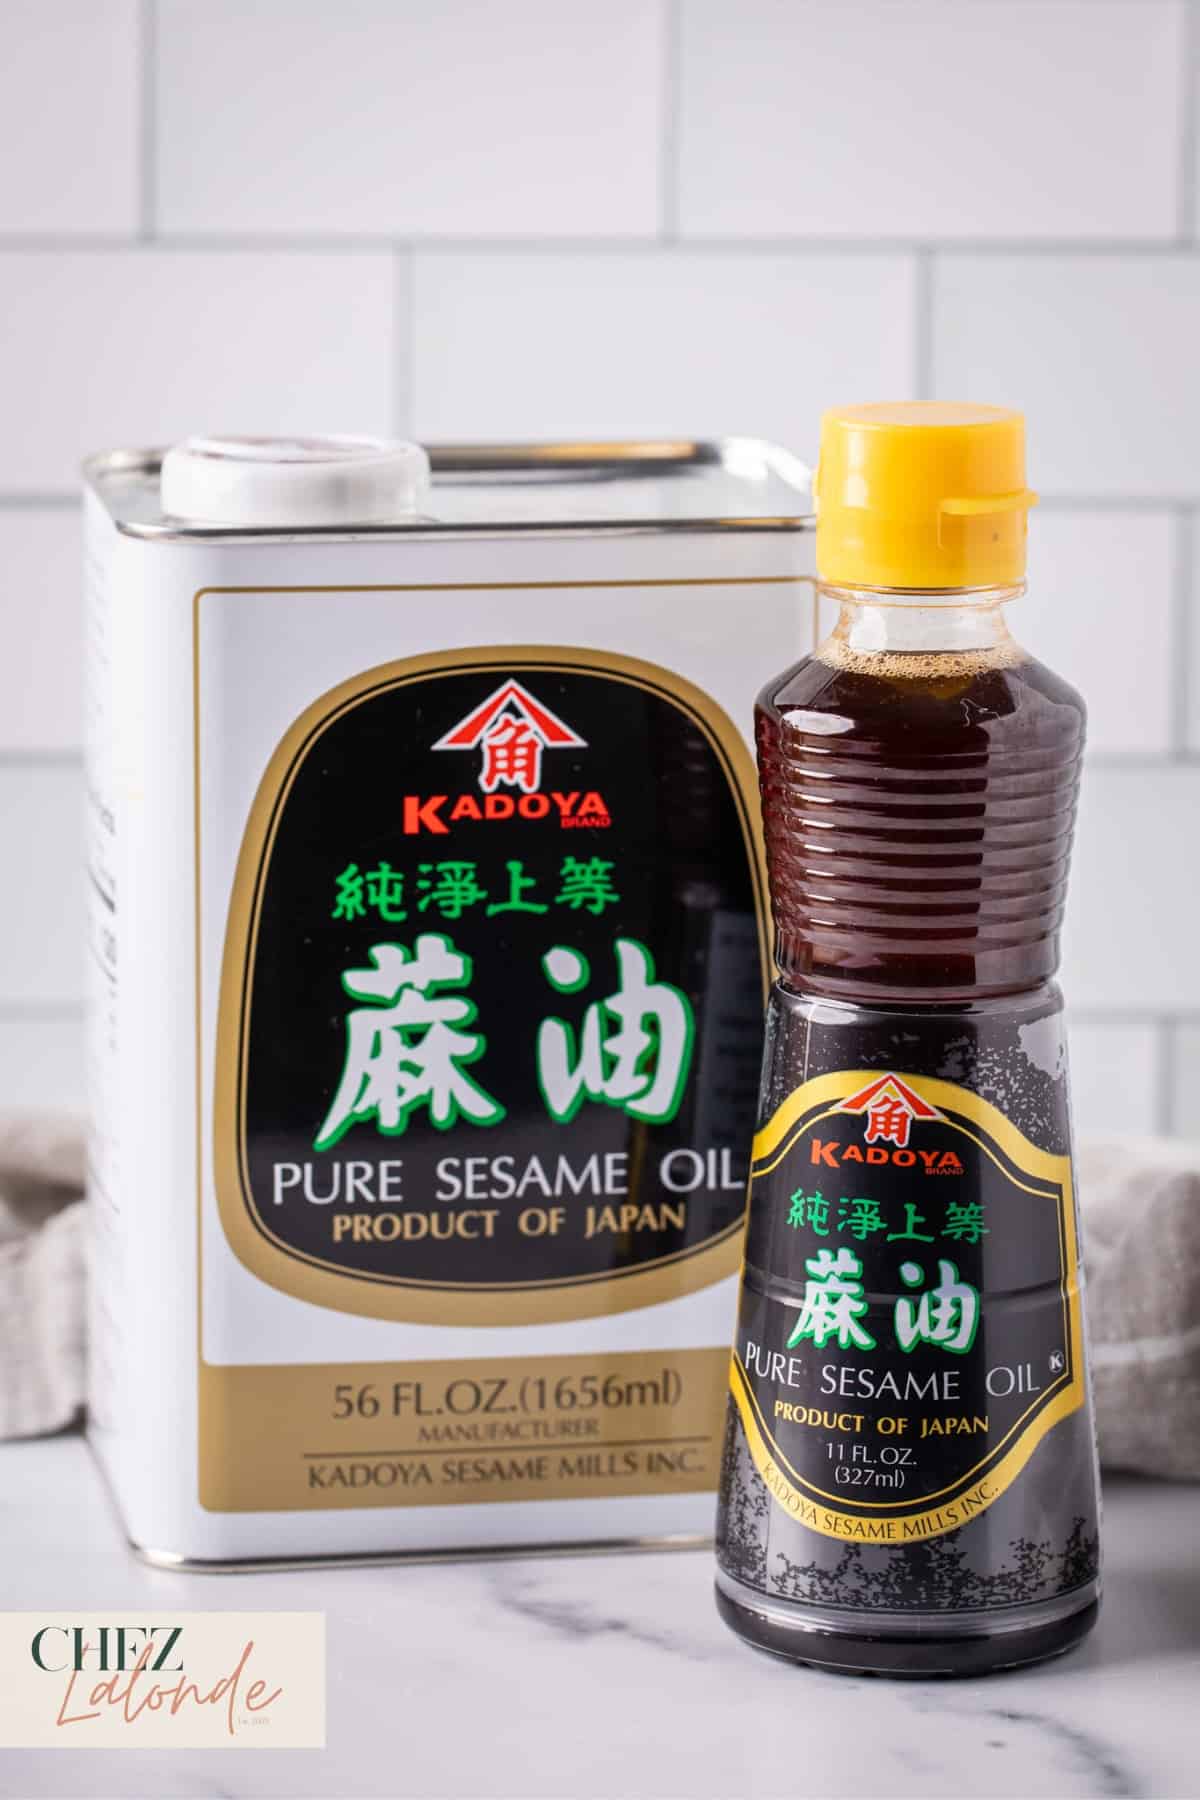 A bottle of Kadoya Sesame oil. 